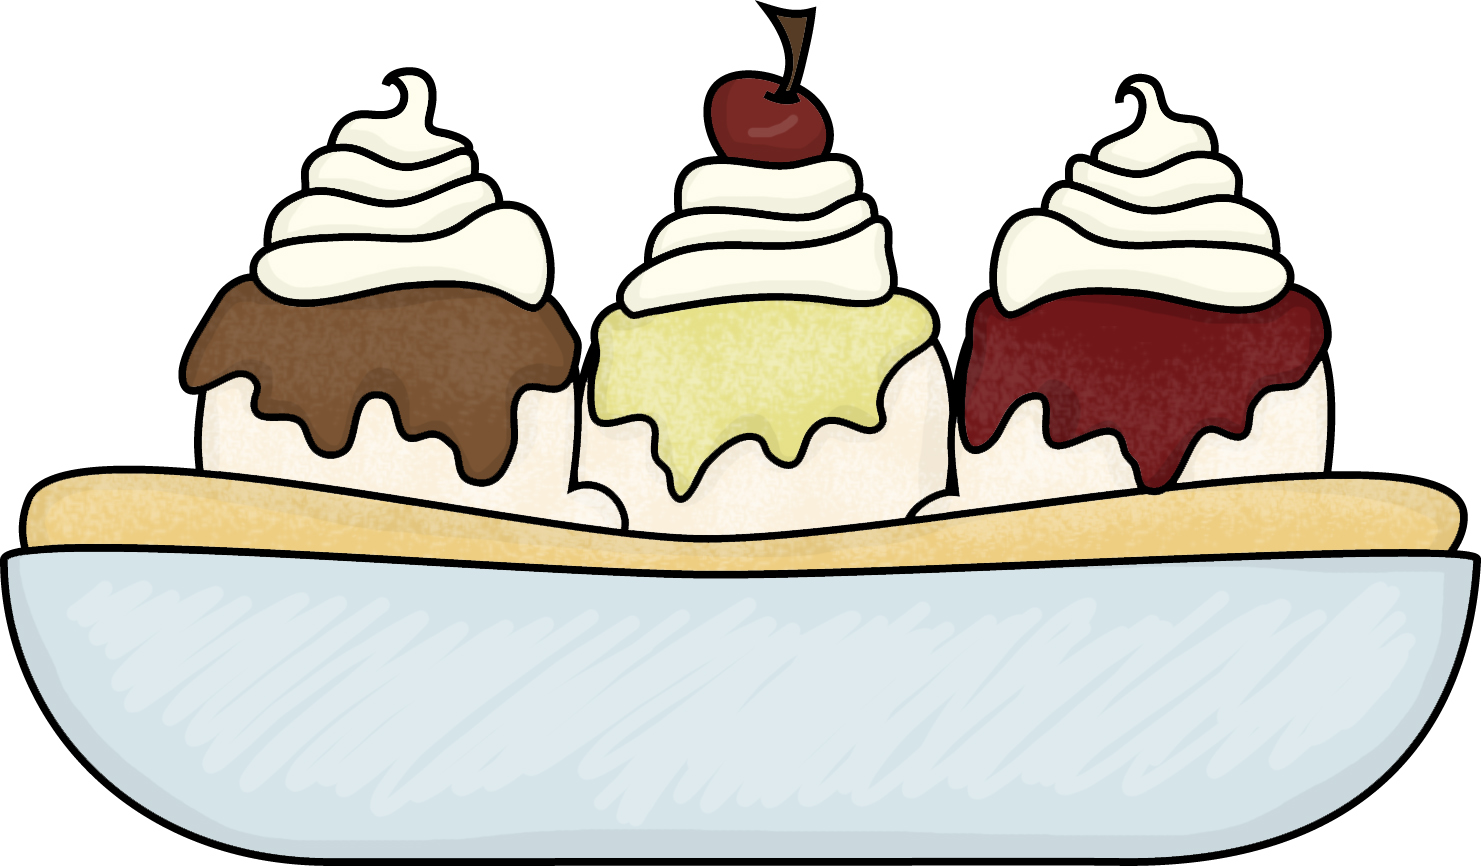 Ice cream sundae bowl clipart